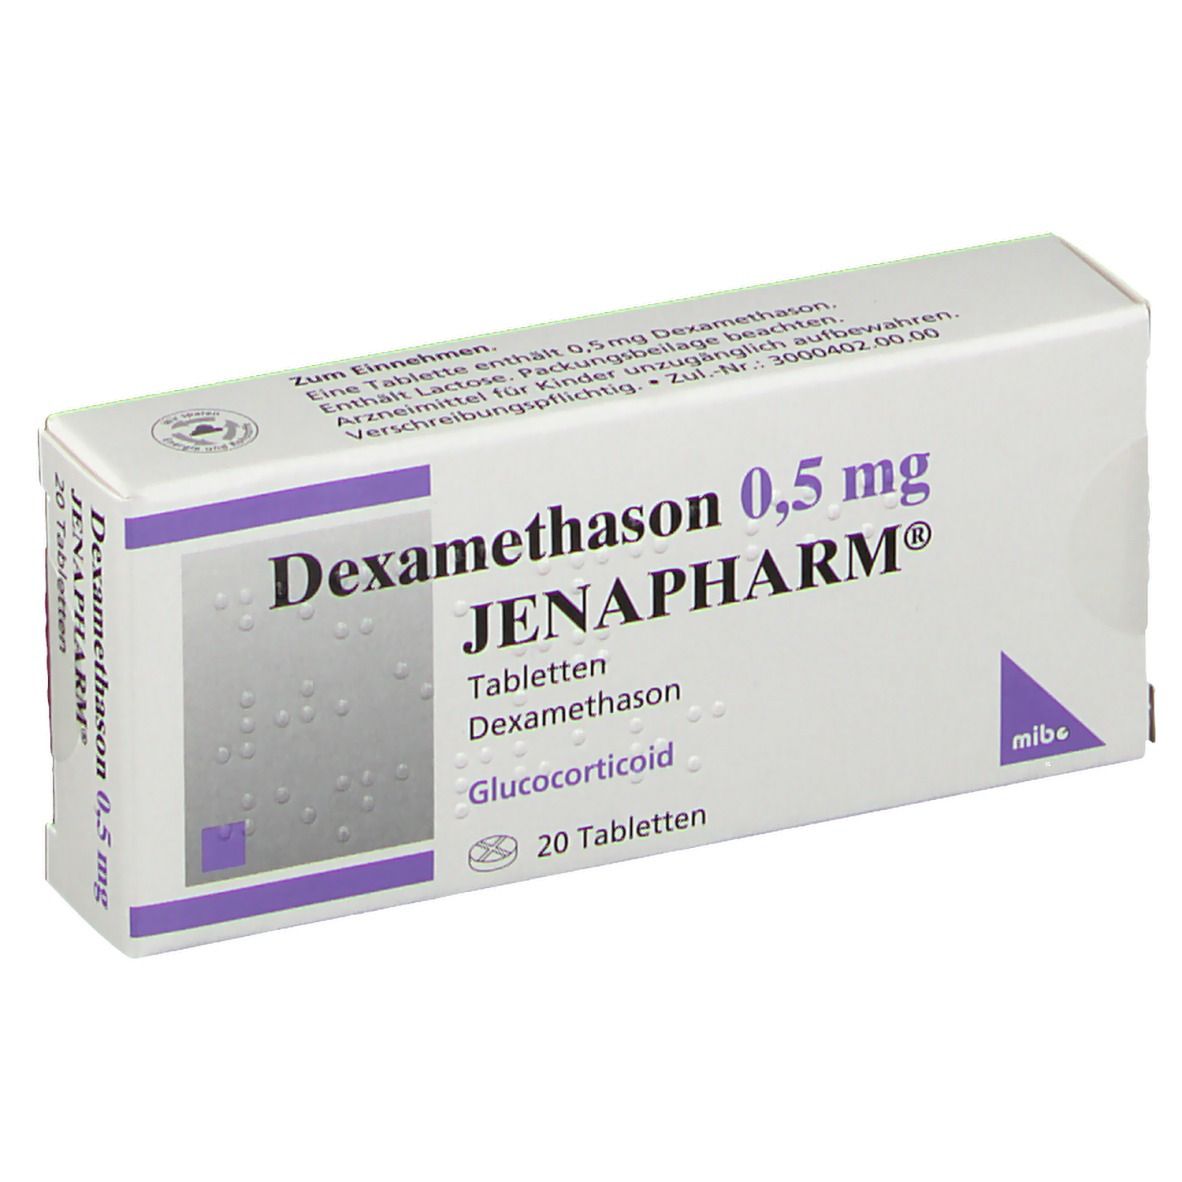 Dexamethason 0,5 mg Jenapharm